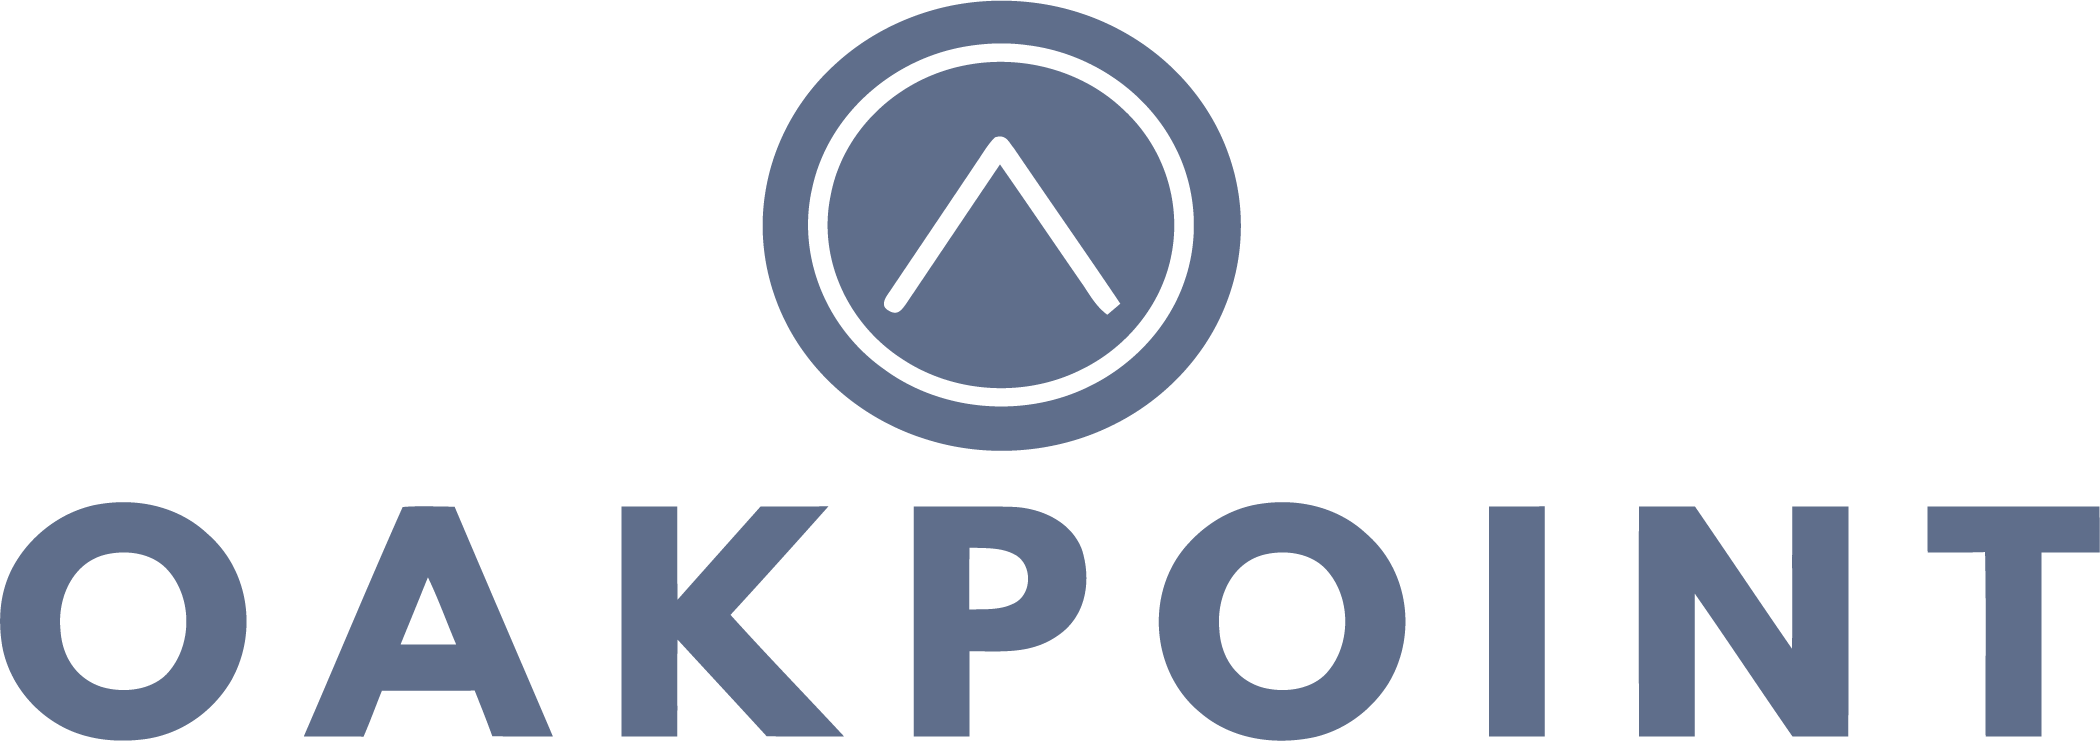 Oakpoint Logo 